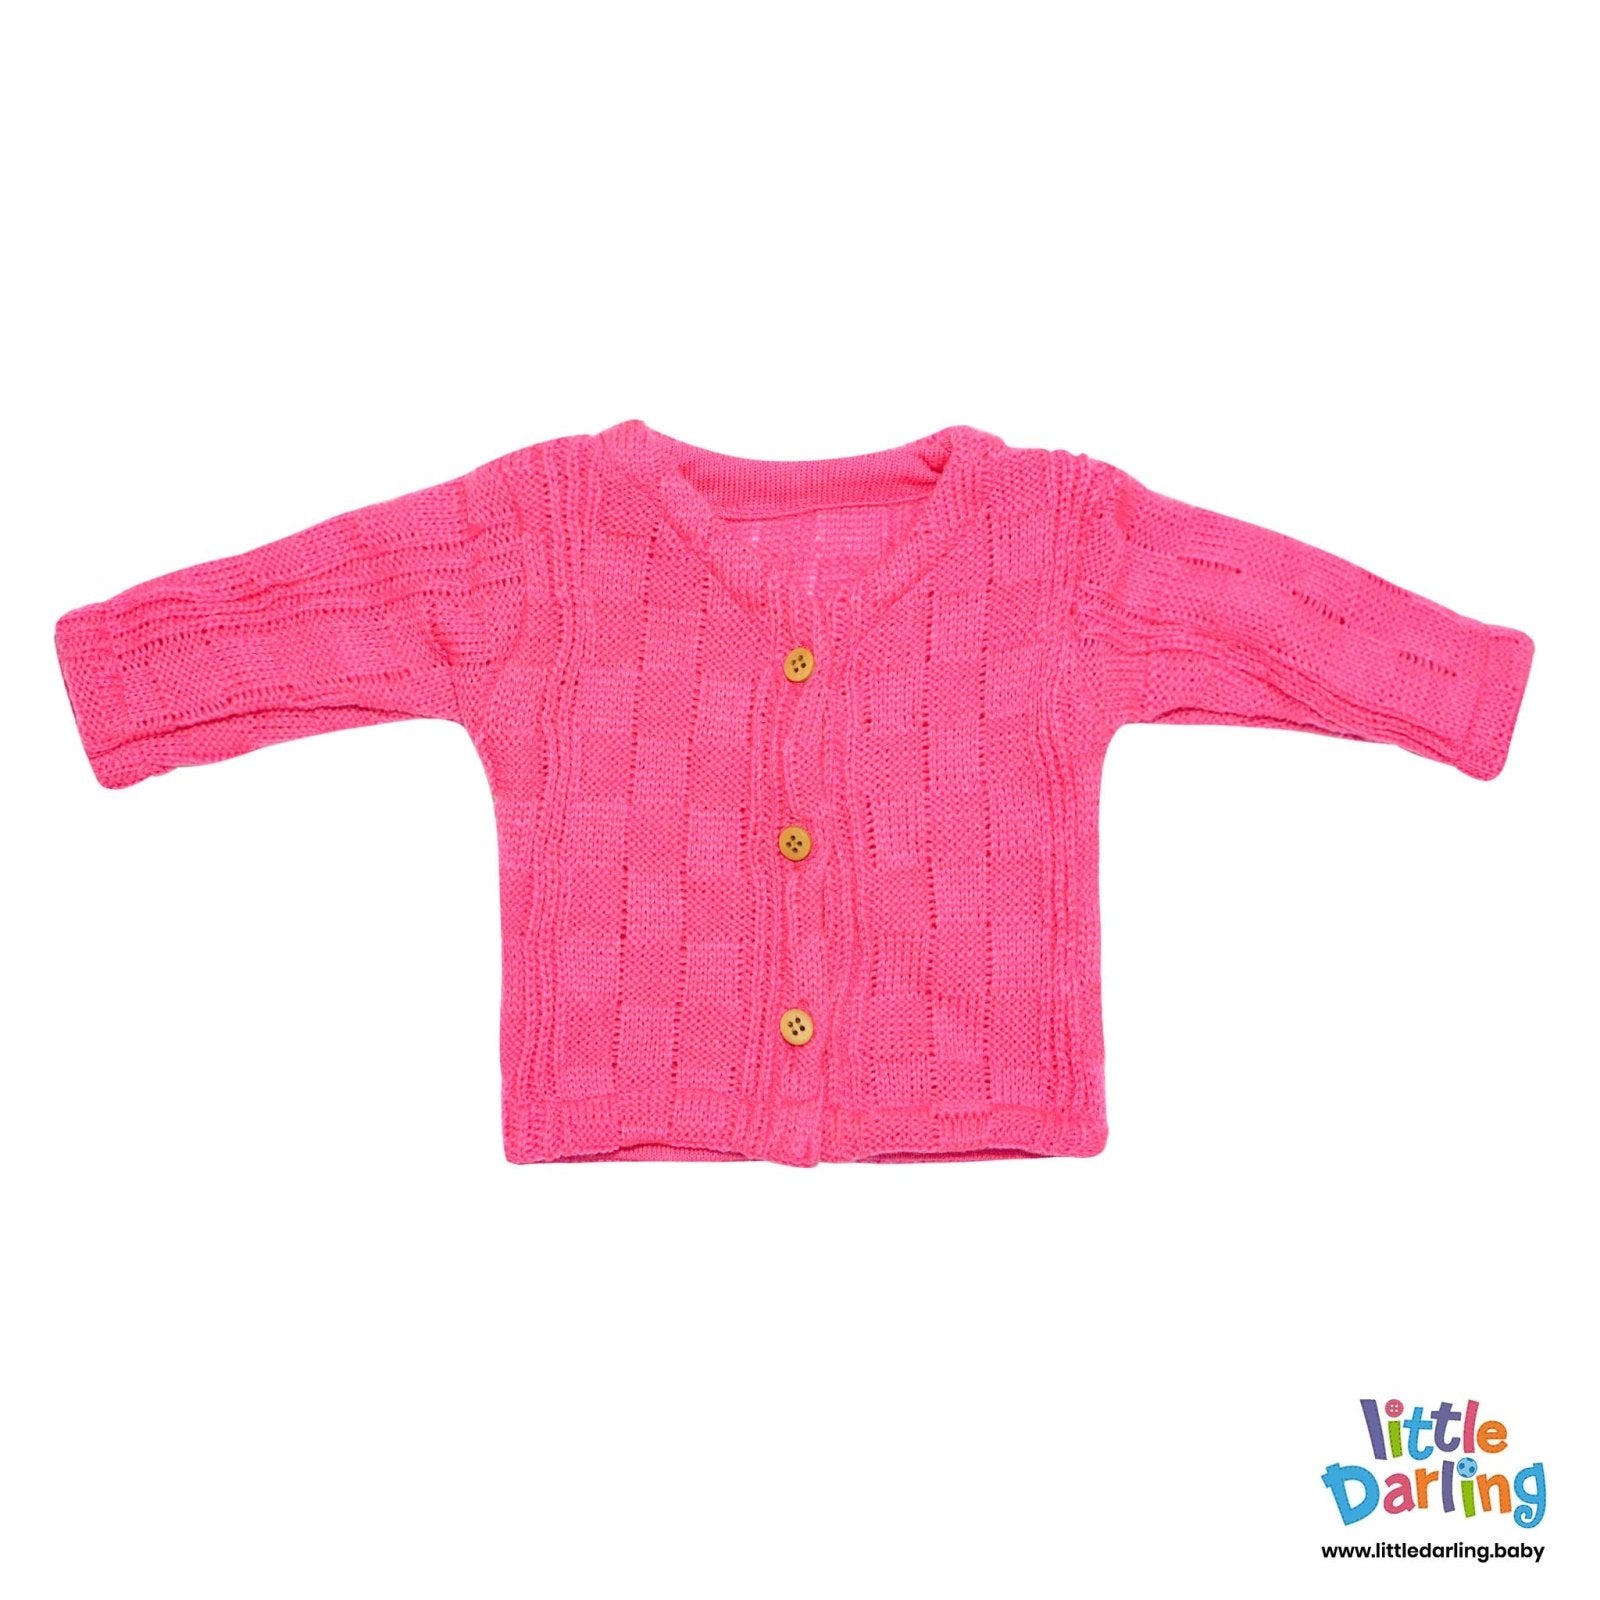 4 Pcs Woolen Gift Set Box Pattern Pink Color by Little Darling